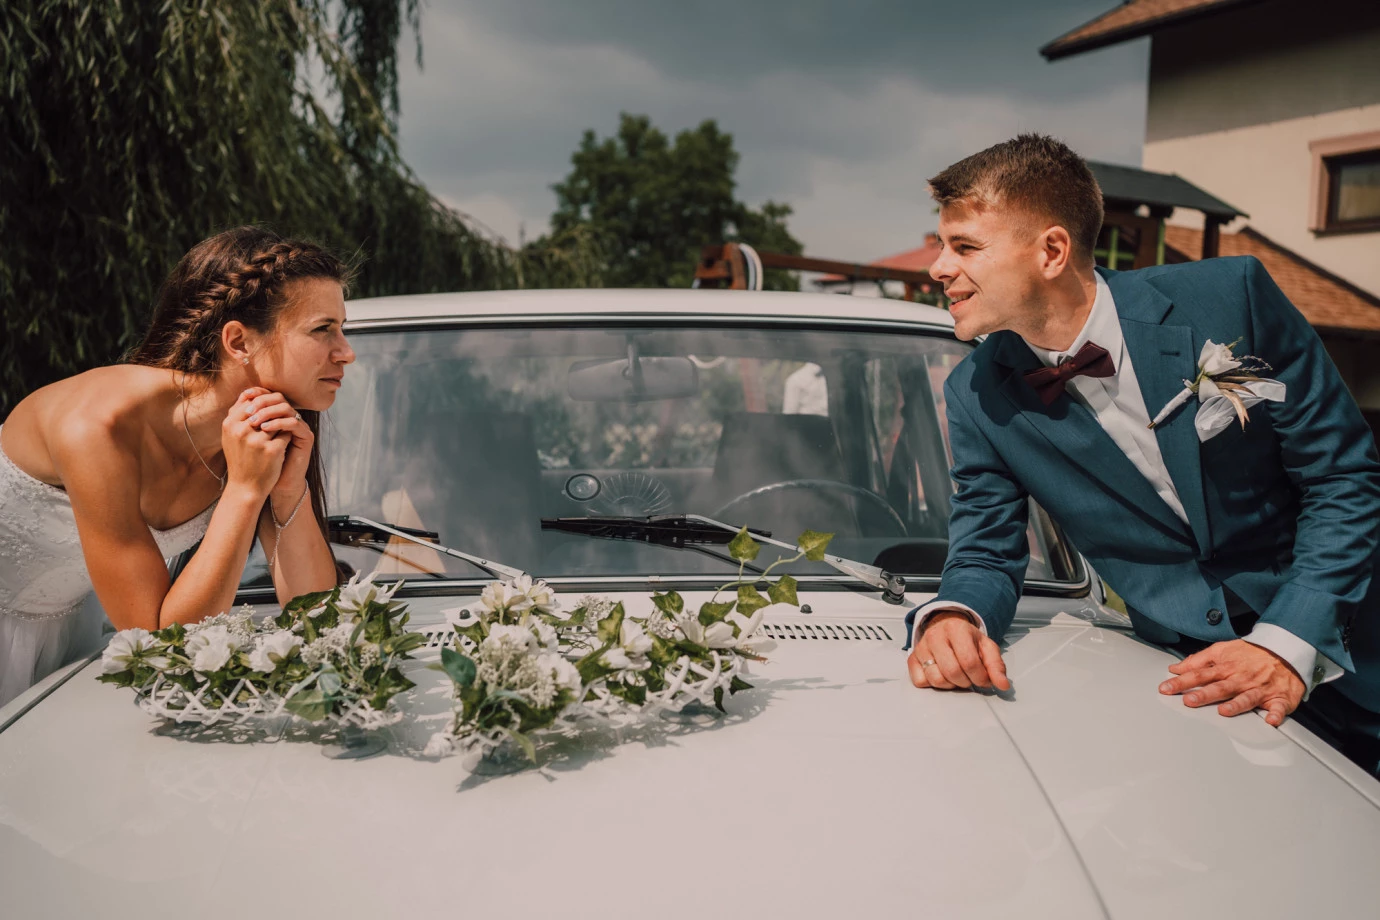 fotograf bielsko-biala daria-jaroszek portfolio zdjecia slubne inspiracje wesele plener slubny sesja slubna